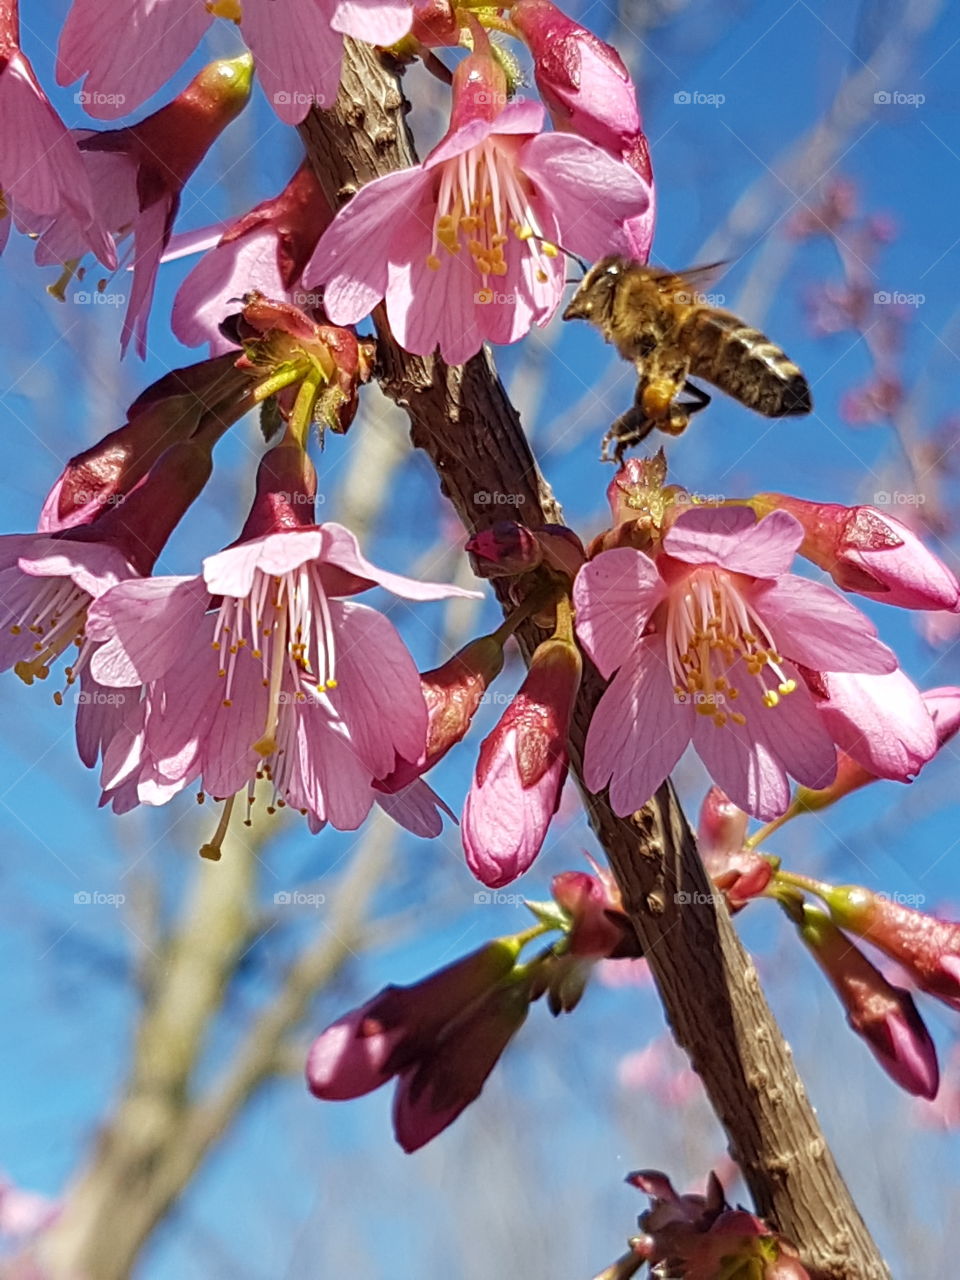 Bee in flight on flowered branch